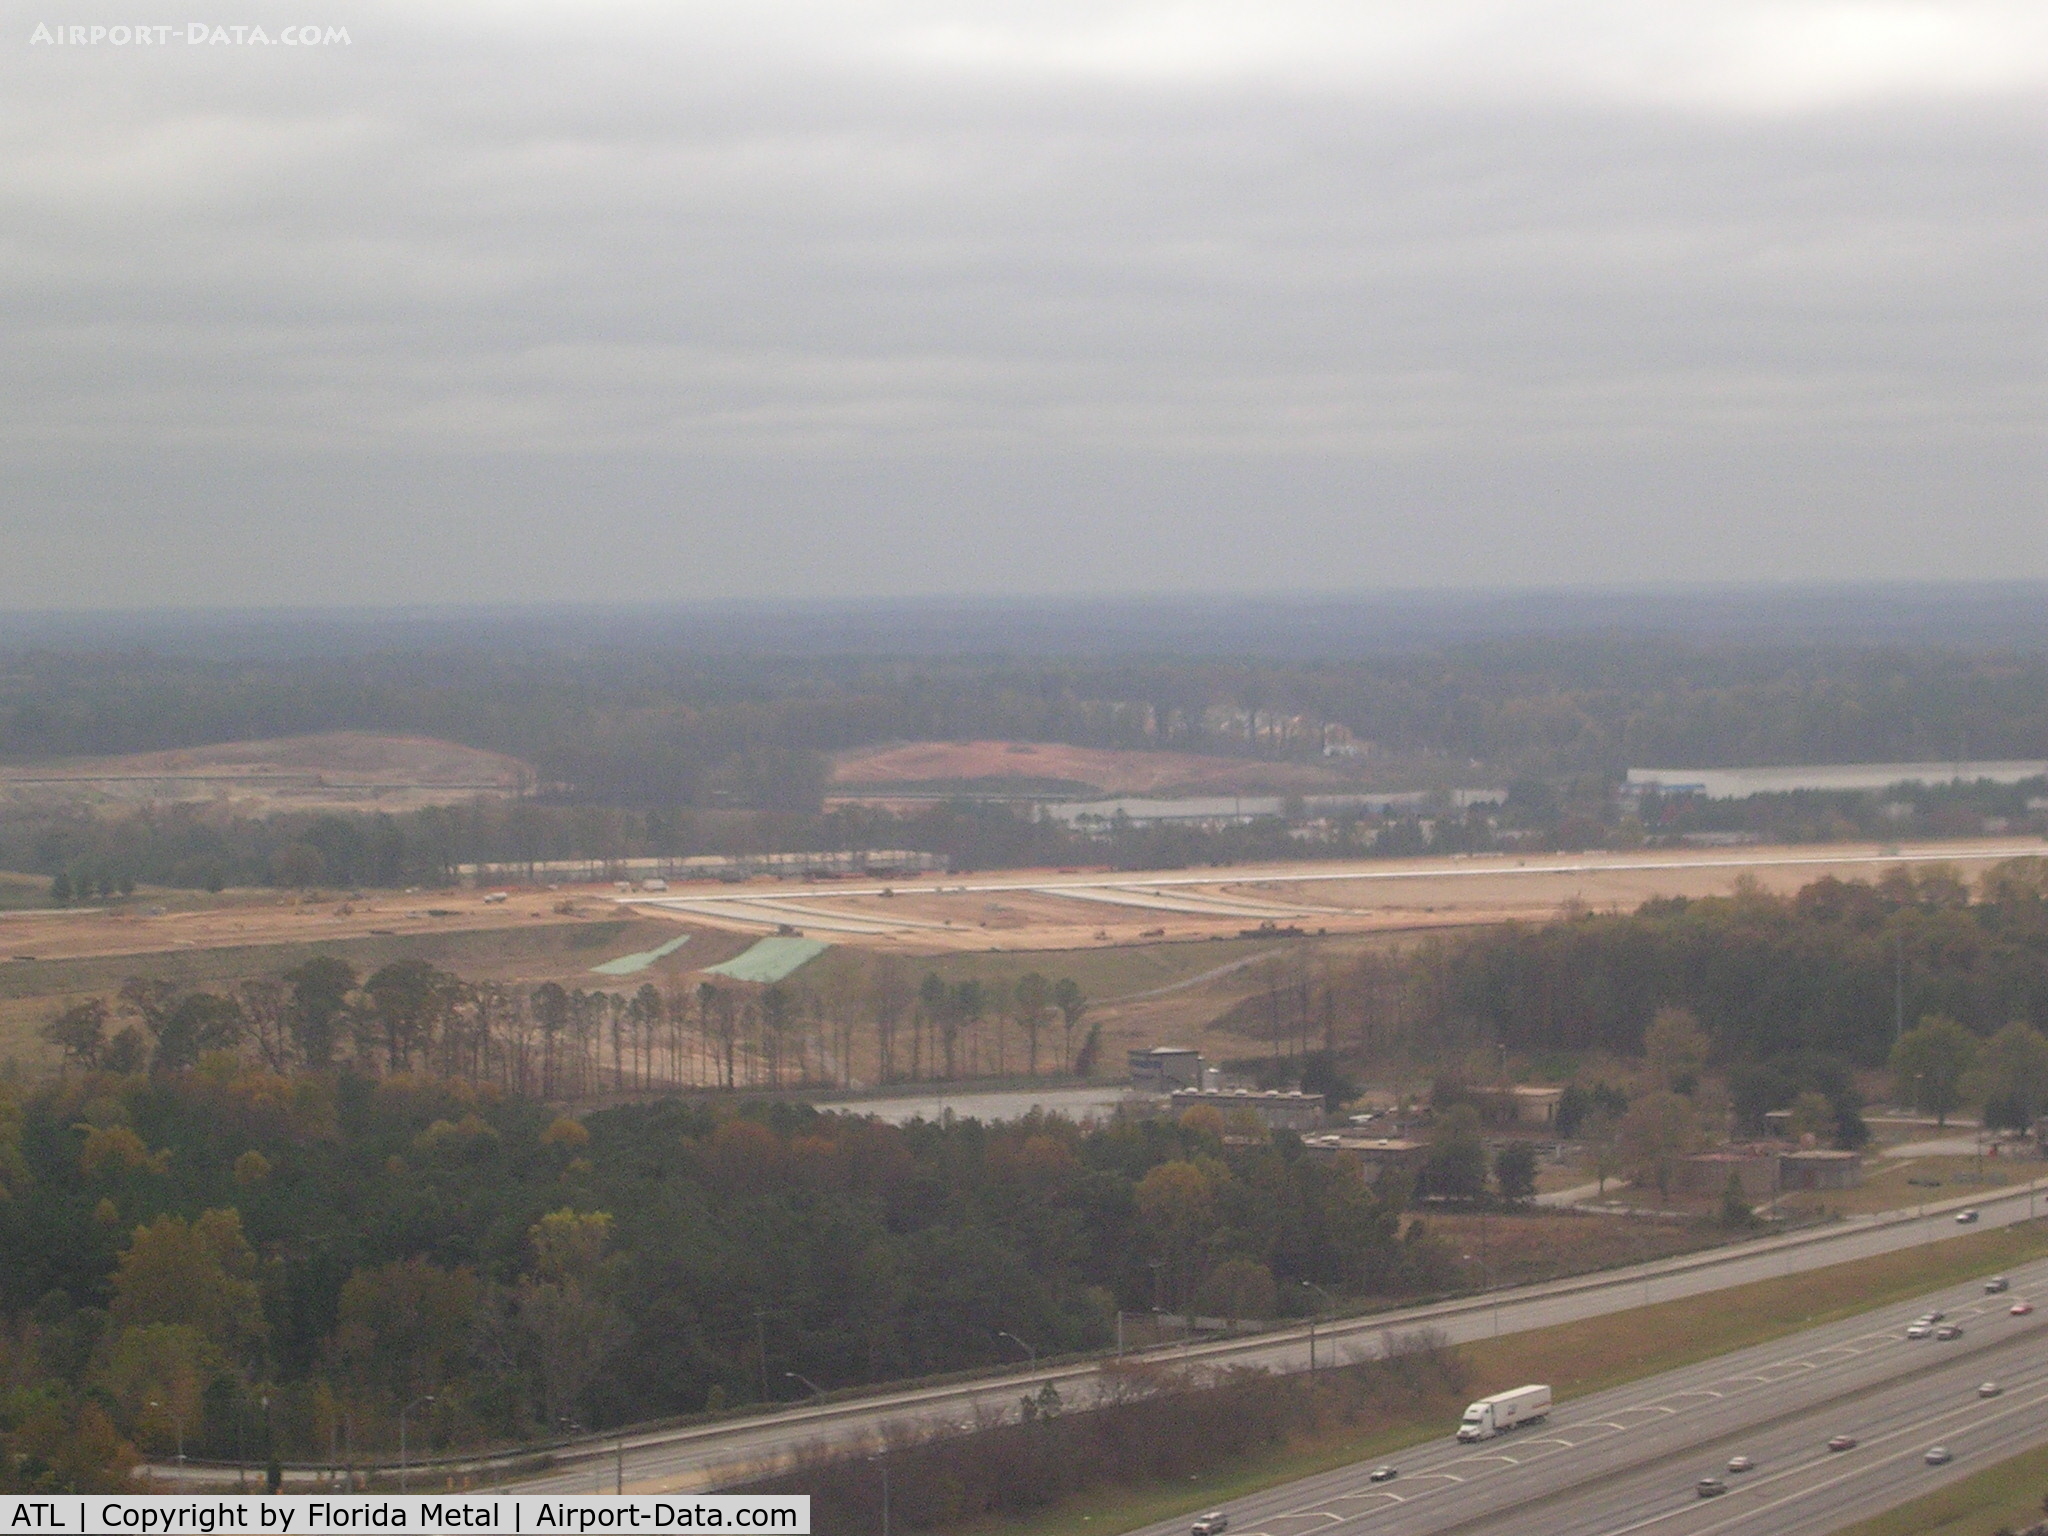 Hartsfield - Jackson Atlanta International Airport (ATL) - New runway being built (taken back in 2004)